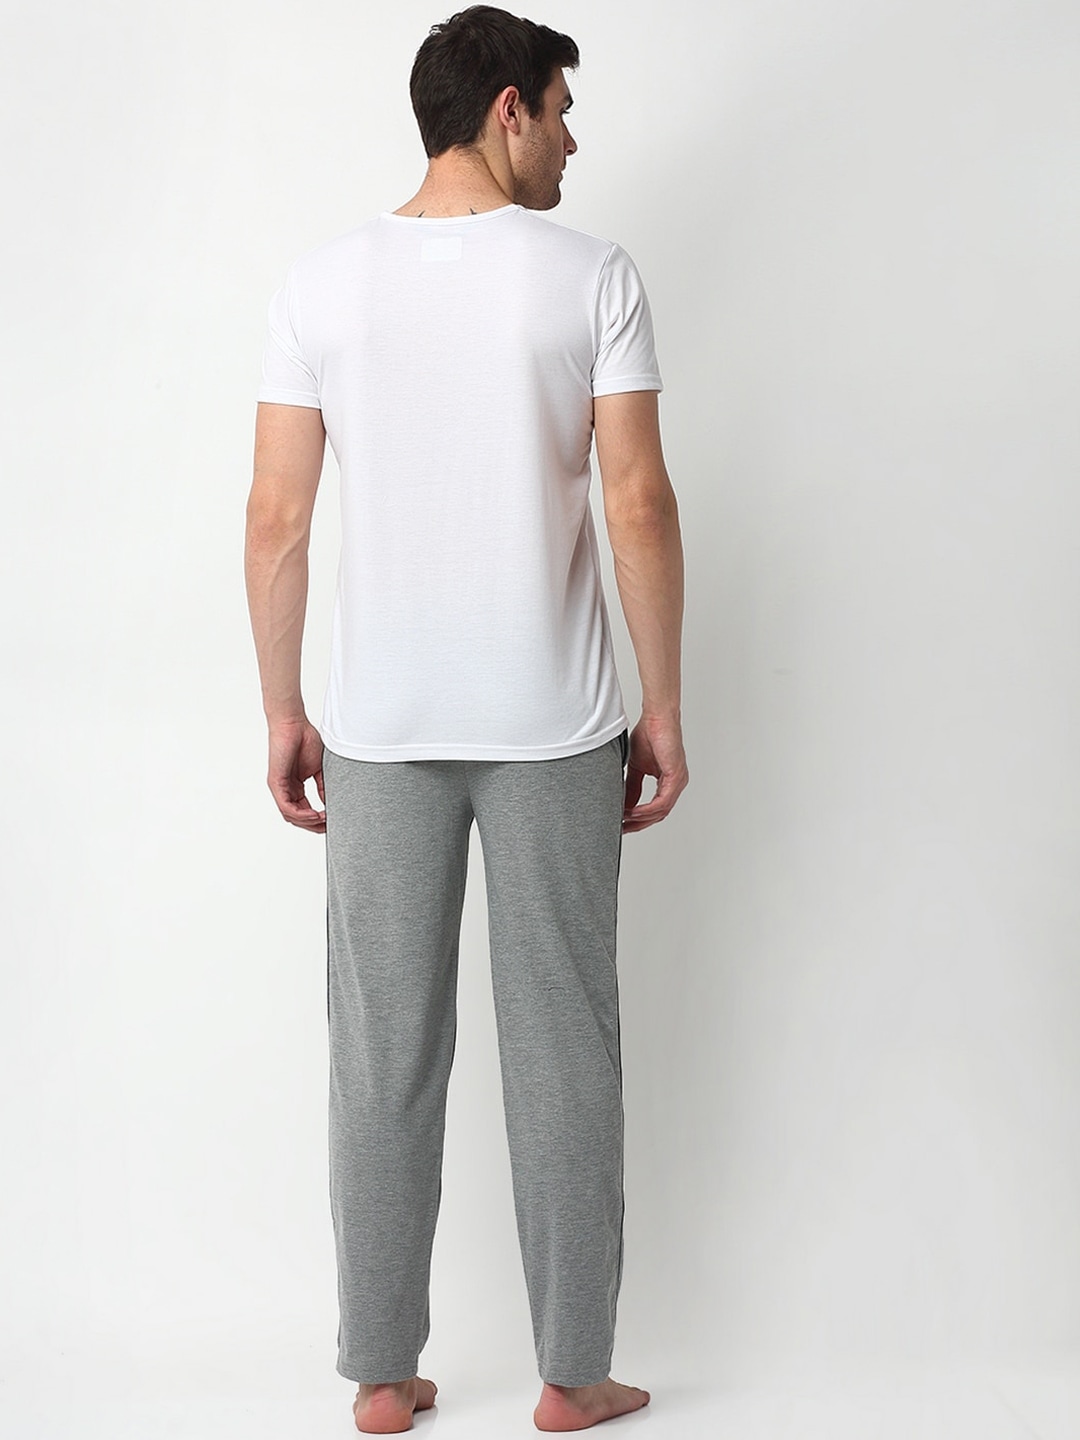 Clothing Tracksuits | Vimal Jonney Men White & Grey Cotton Blend Track Suit - ID23043